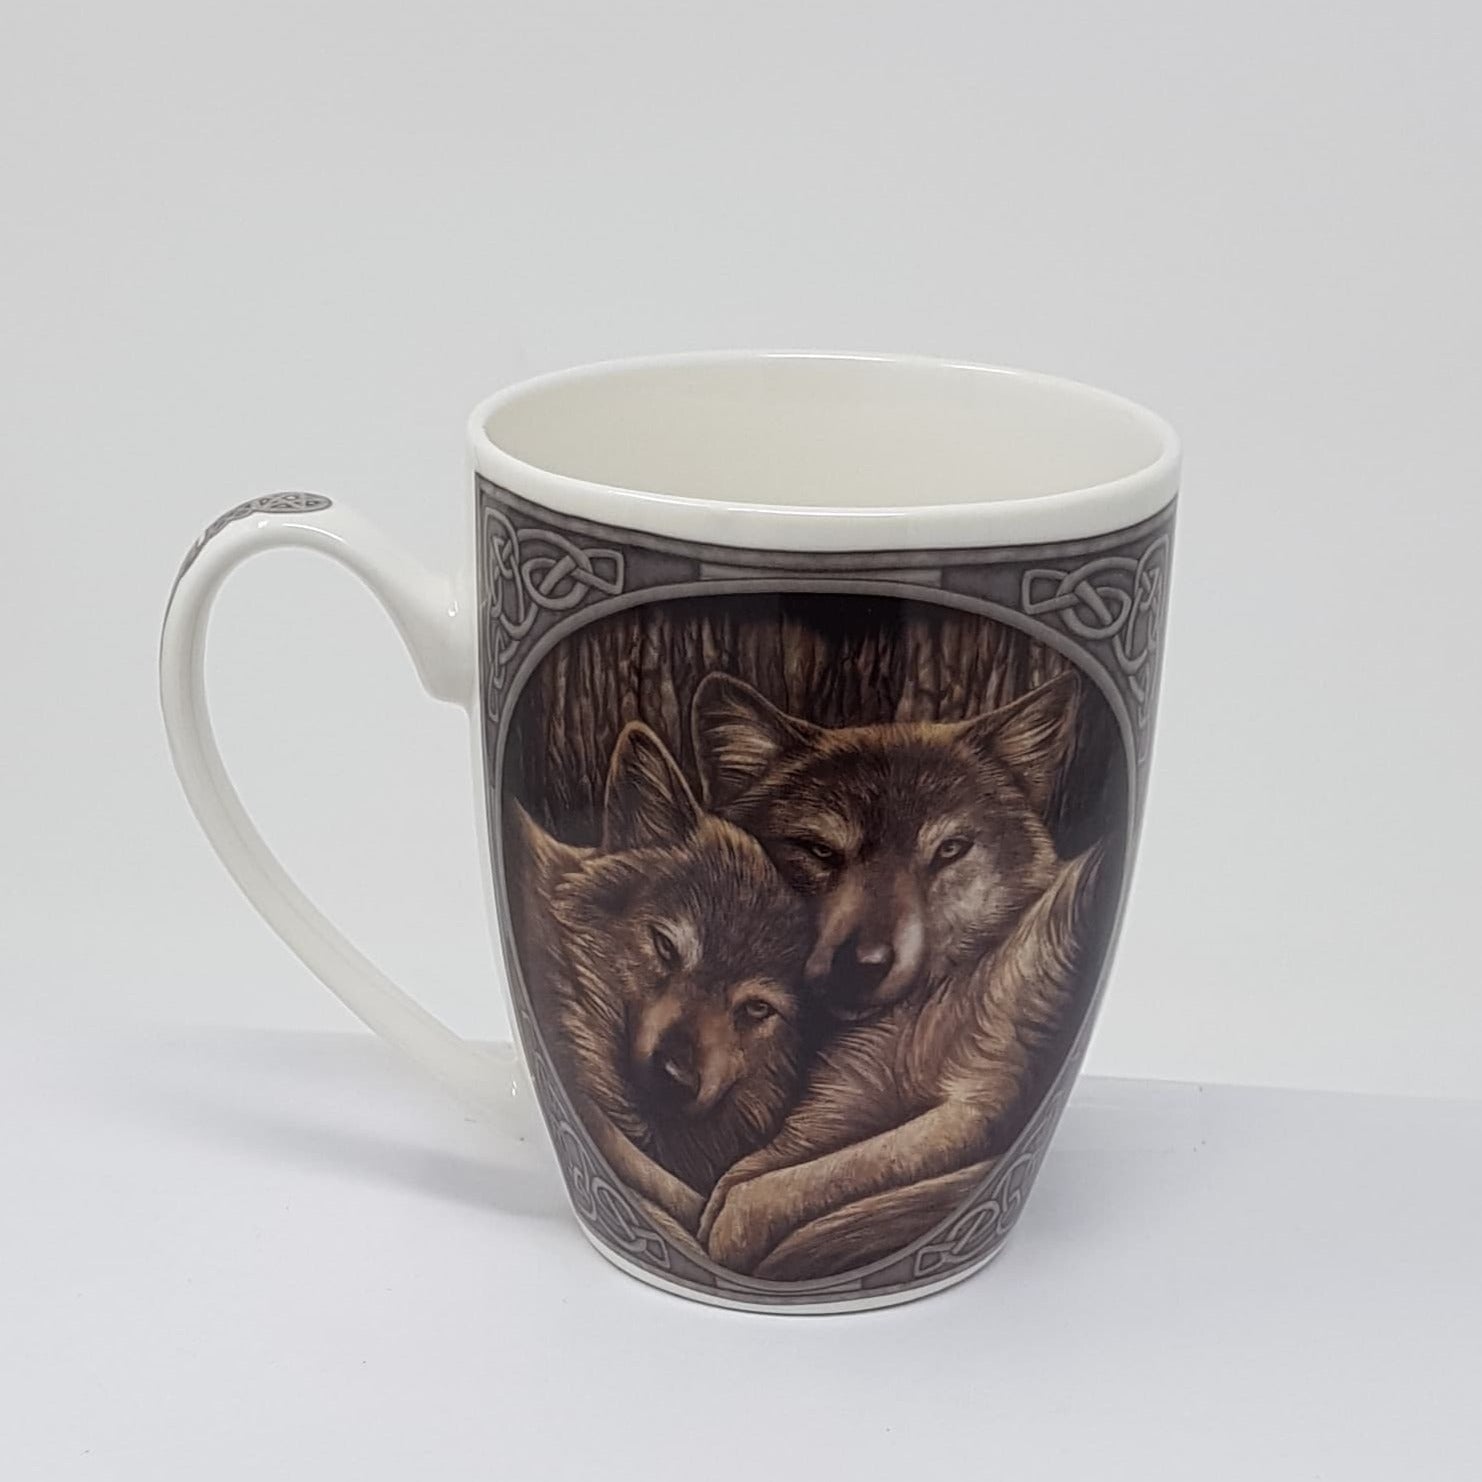 General Gift - Mug / Two Wolves Cuddling 'Loyal Companions'